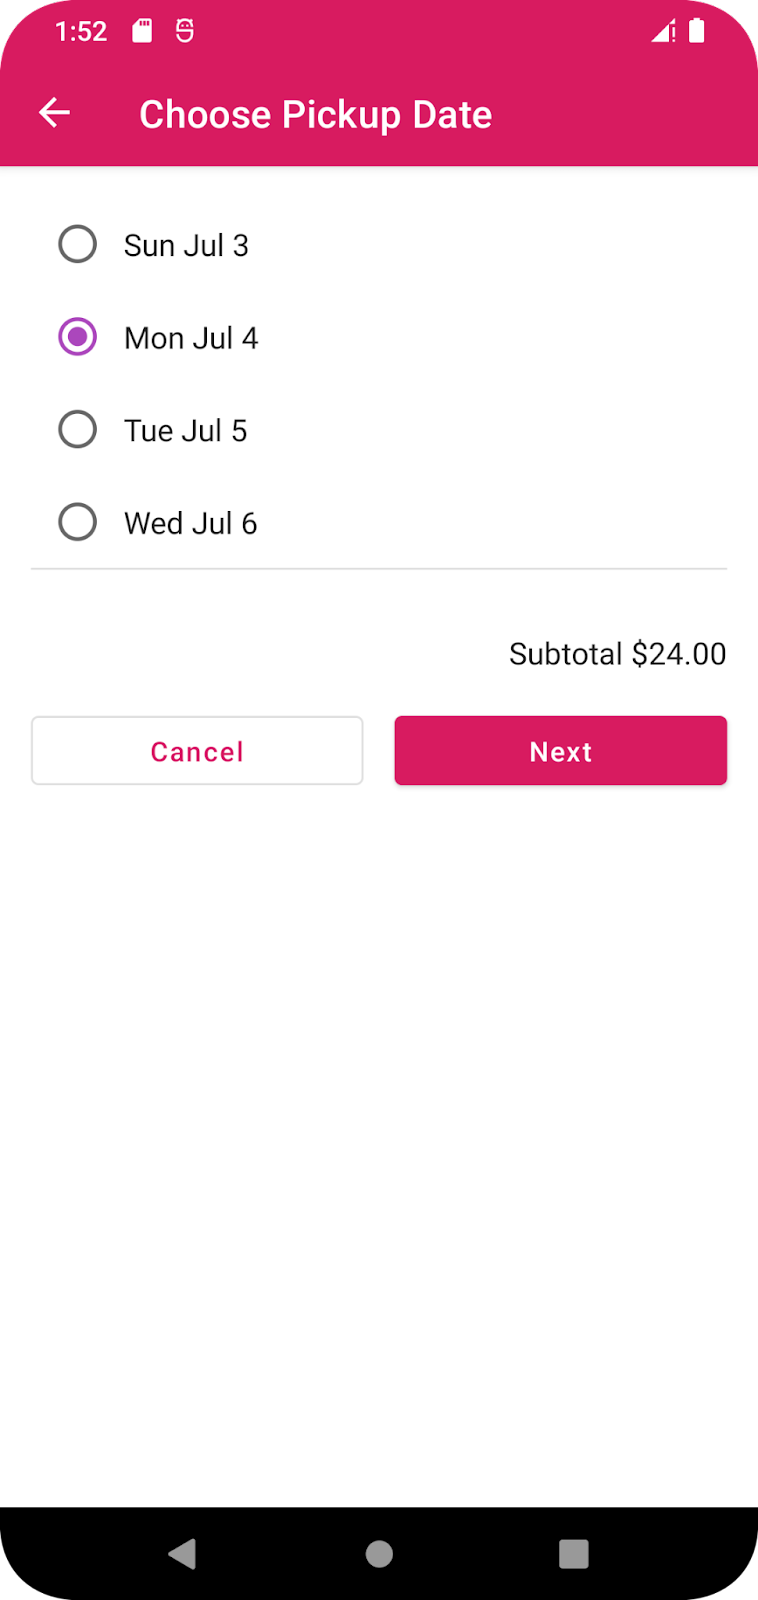 Cupcake 应用向用户显示若干自提日期选项。